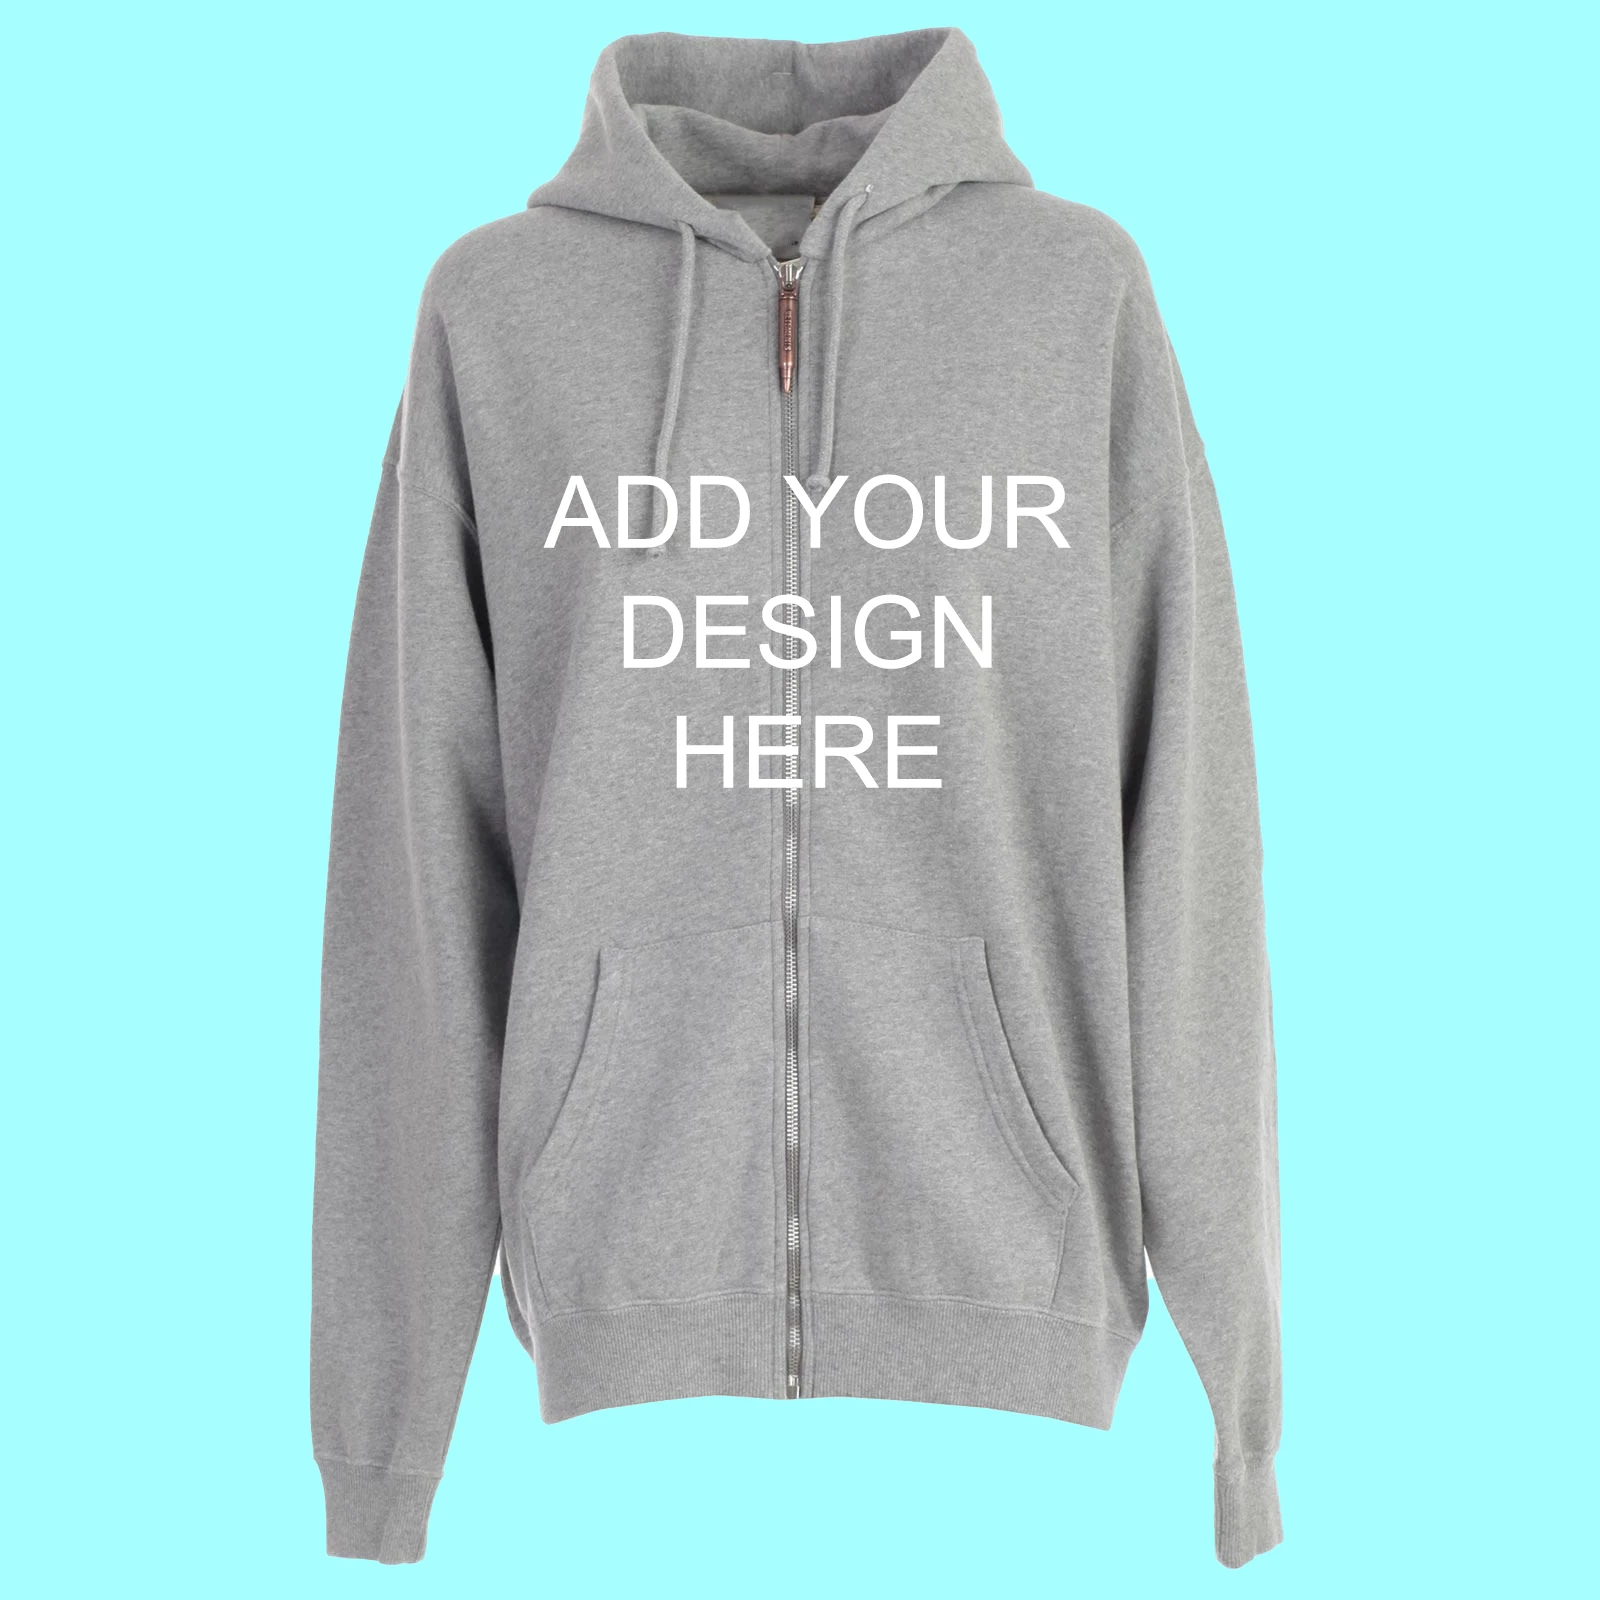 where can i buy a supreme hoodie